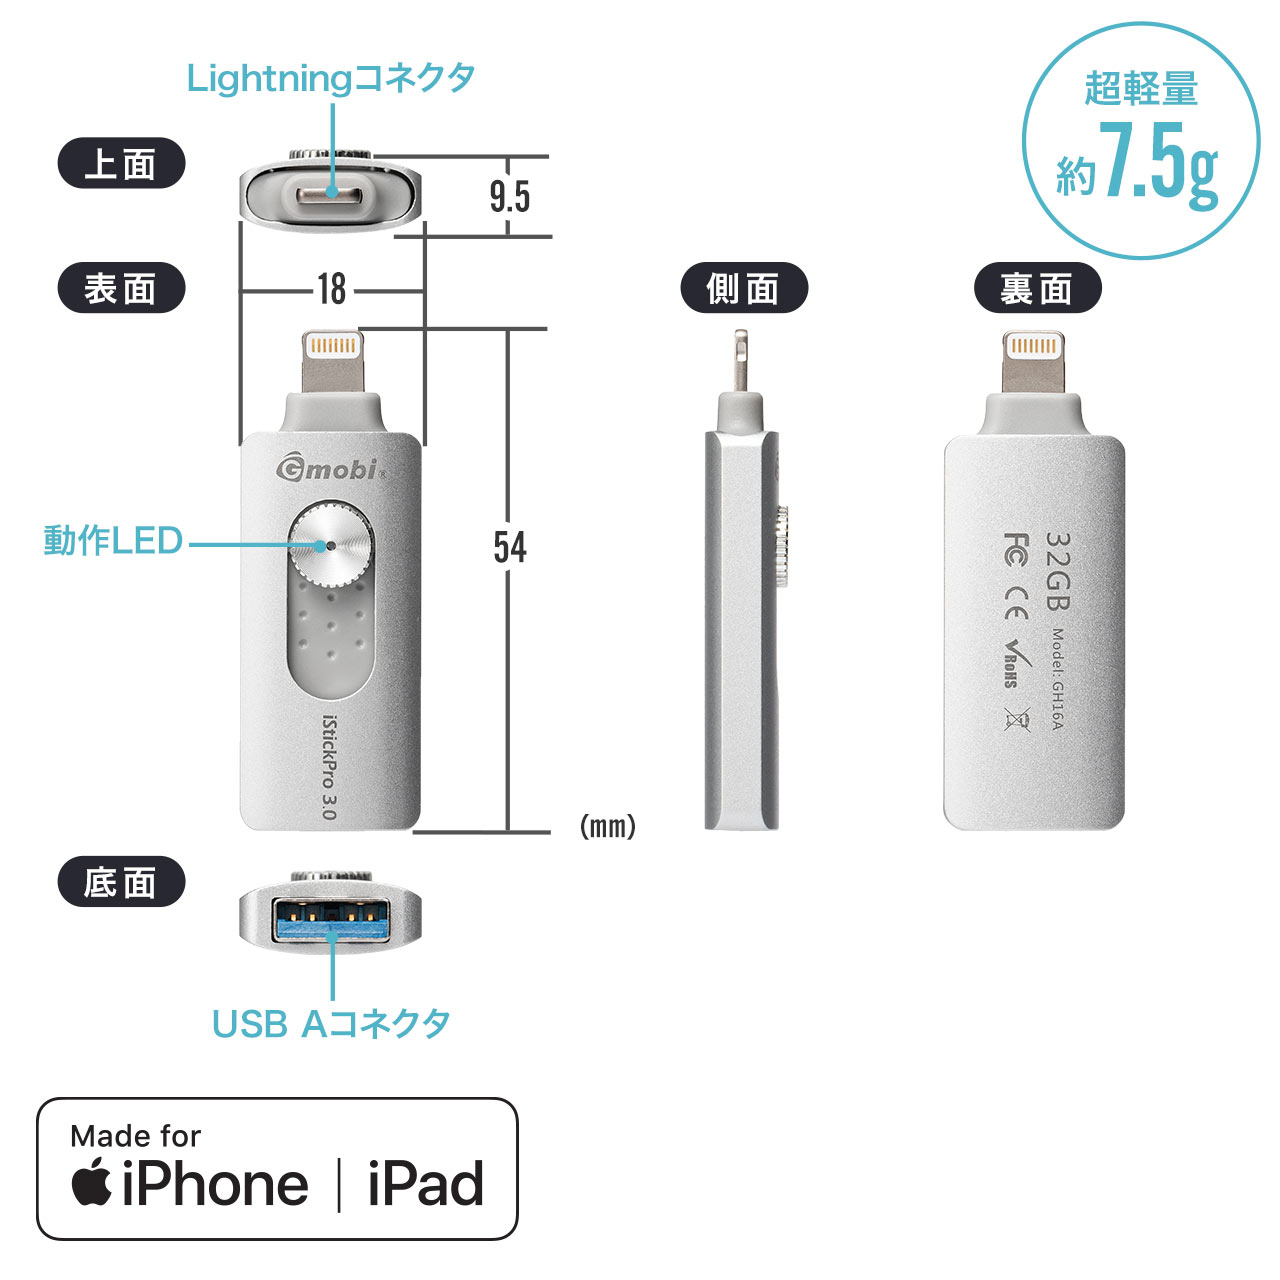 iPhoneEiPad USB 128GBiUSB3.1 Gen1ELightningΉEMFiF؁EiStickPro 3.0EK^bNj 600-IPL128GAGM